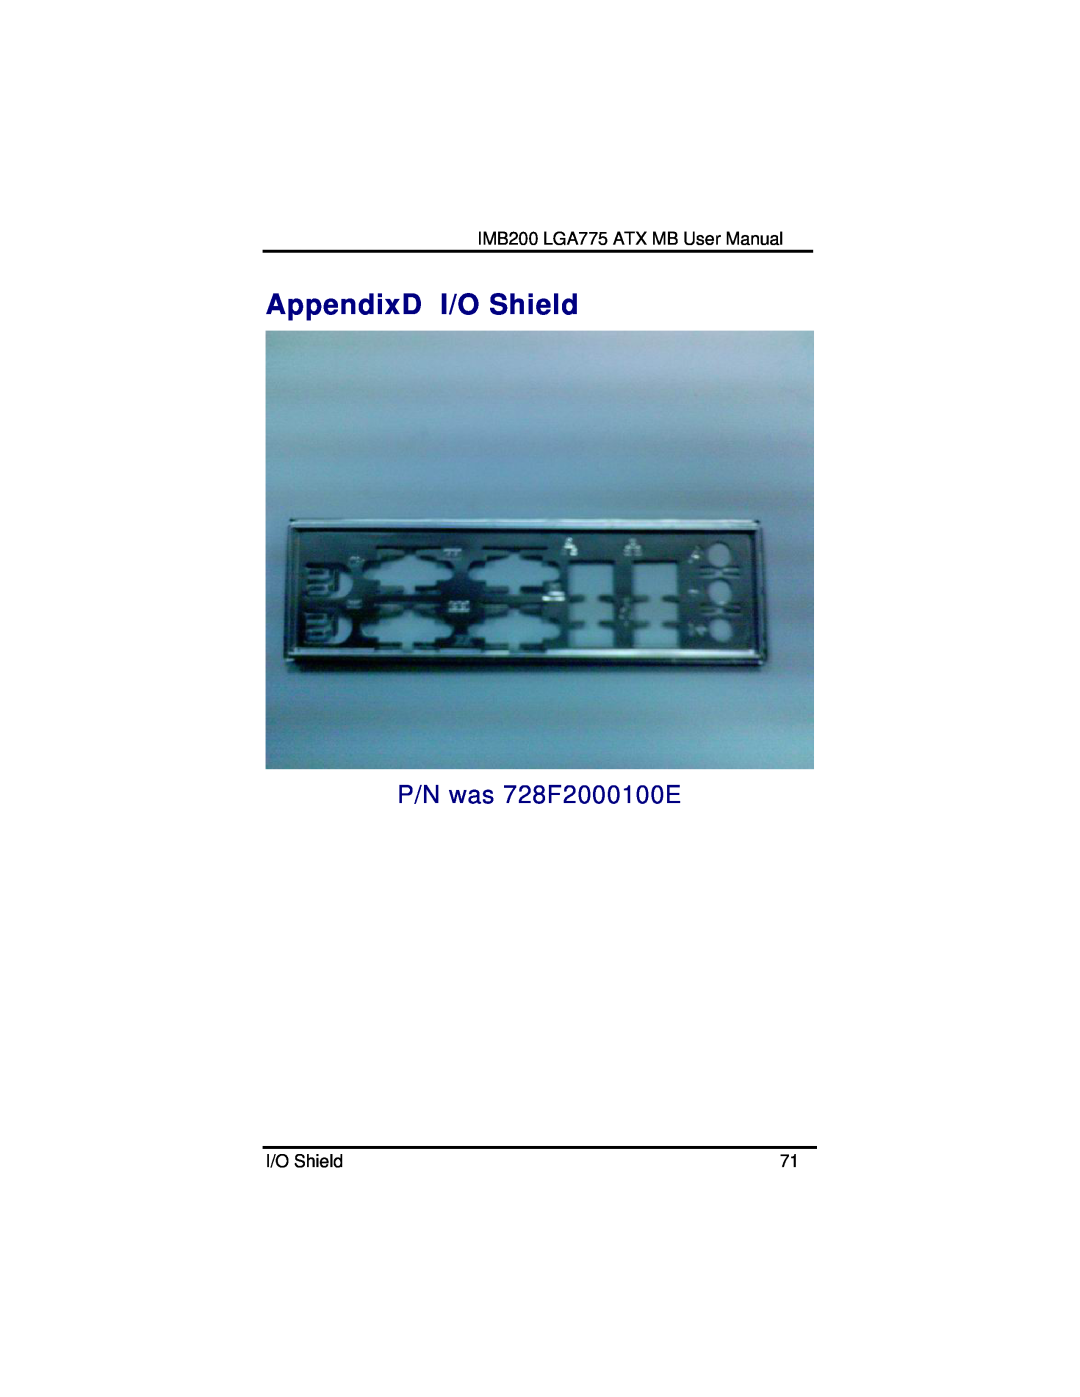 Intel IMB200VGE user manual AppendixD I/O Shield, P/N was 728F2000100E 